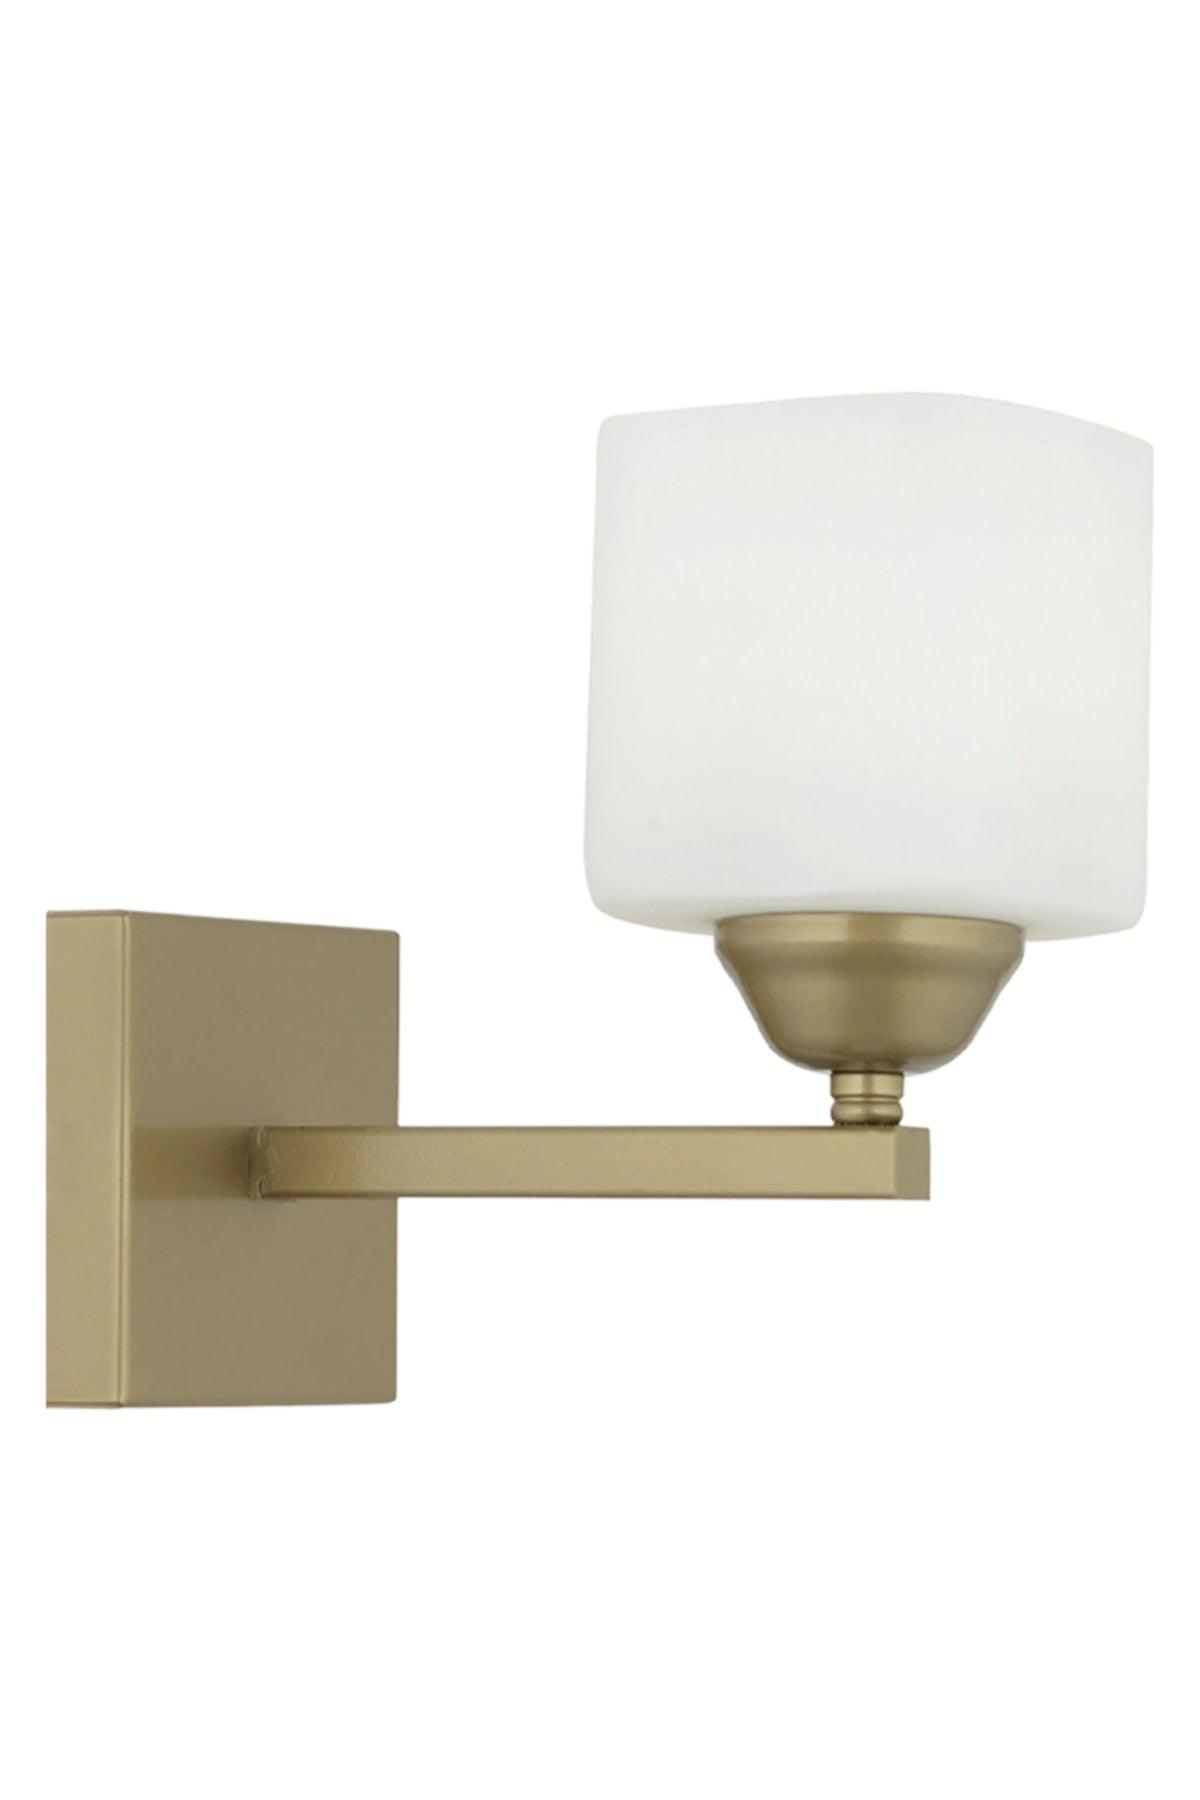 Minel Tumbled Wall Lamp Modern Wall Sconce For Bedroom-Bedhead-Bathroom - Swordslife